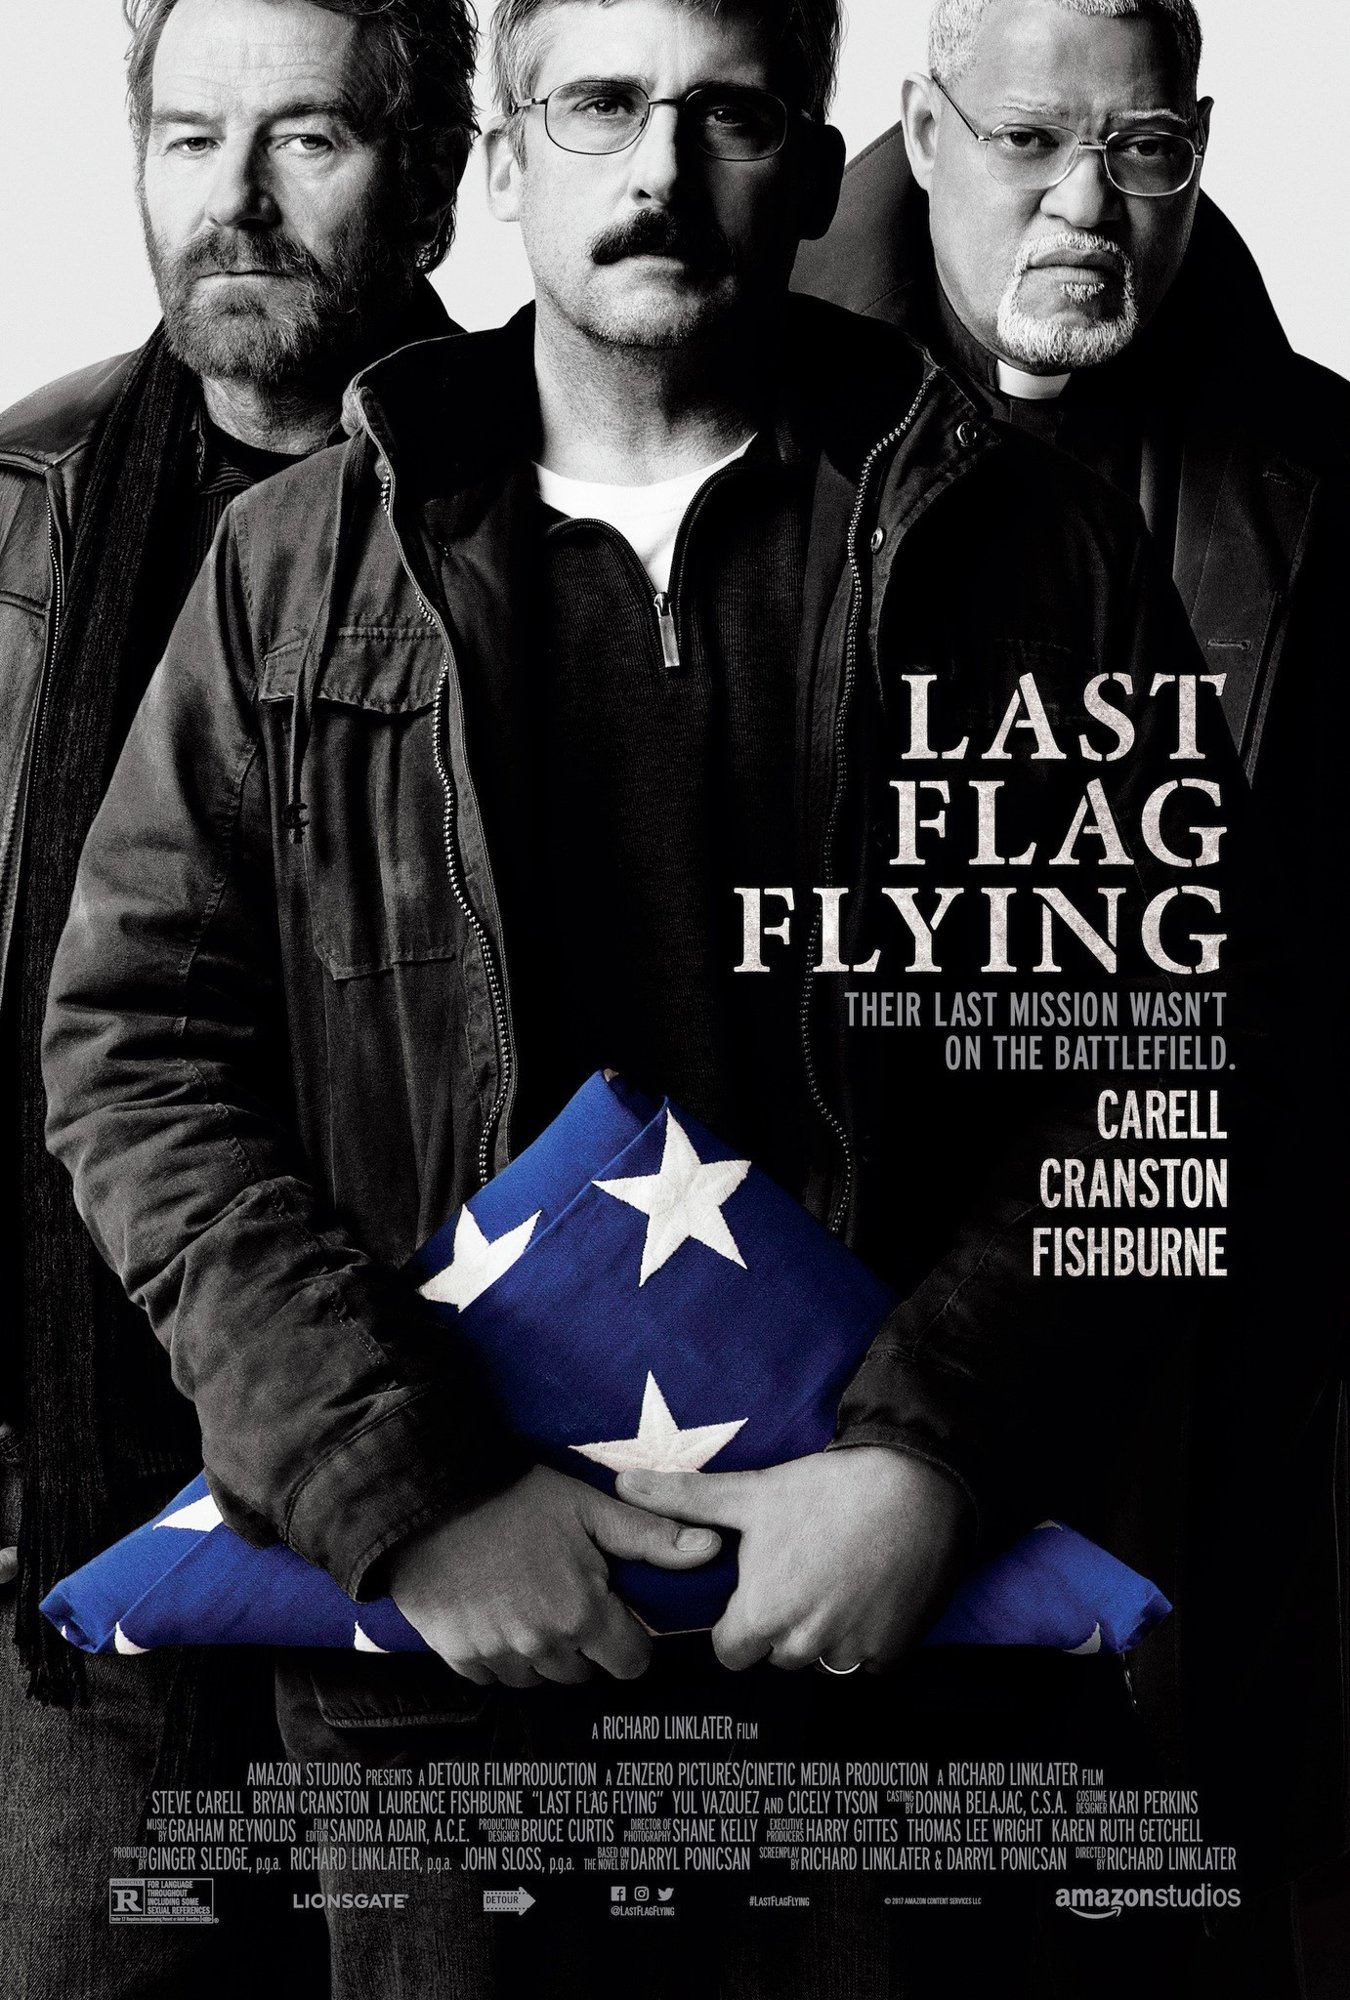 Poster of Amazon Studios' Last Flag Flying (2017)